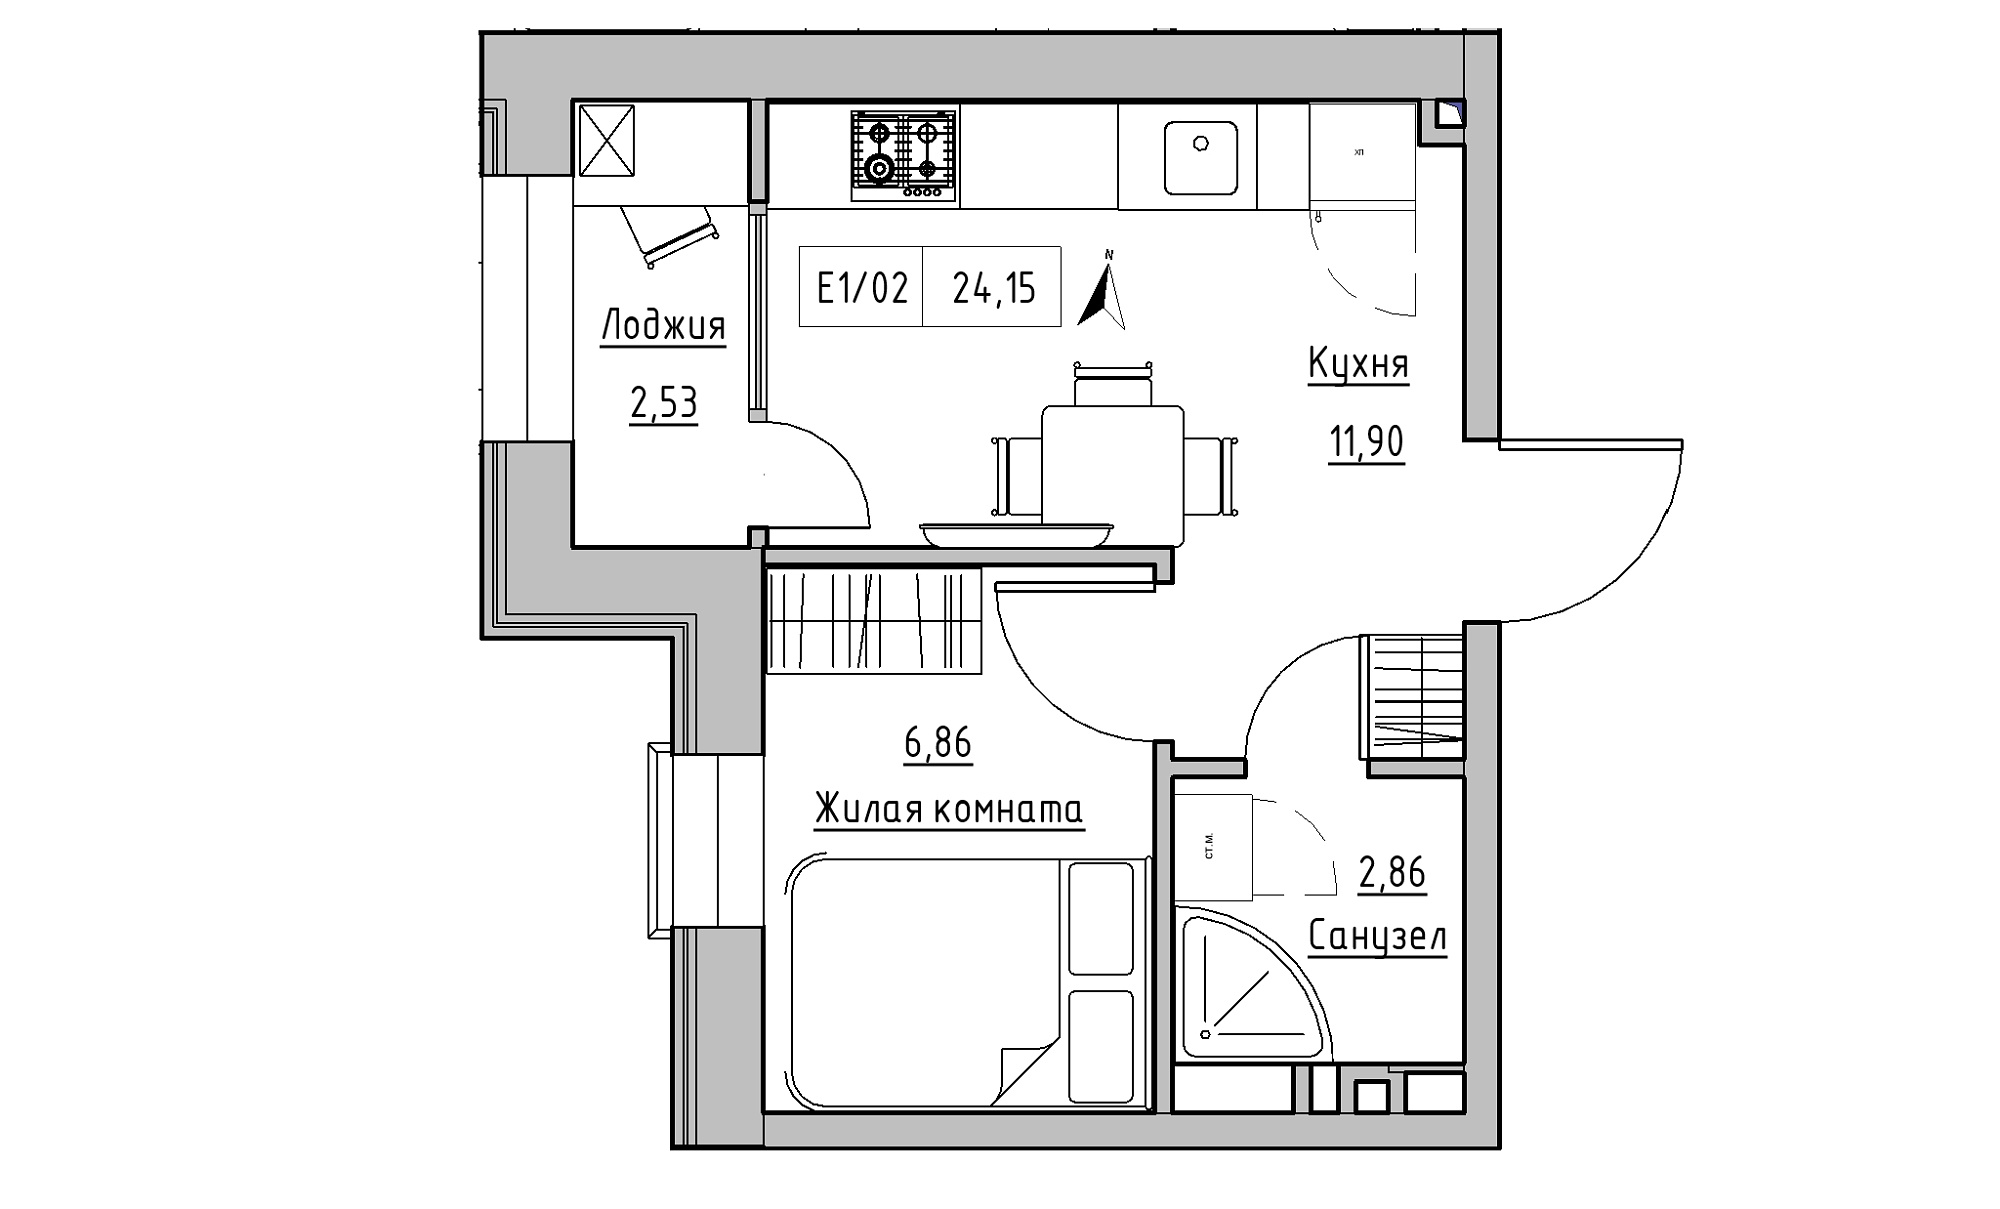 Planning 1-rm flats area 24.15m2, KS-015-01/0001.